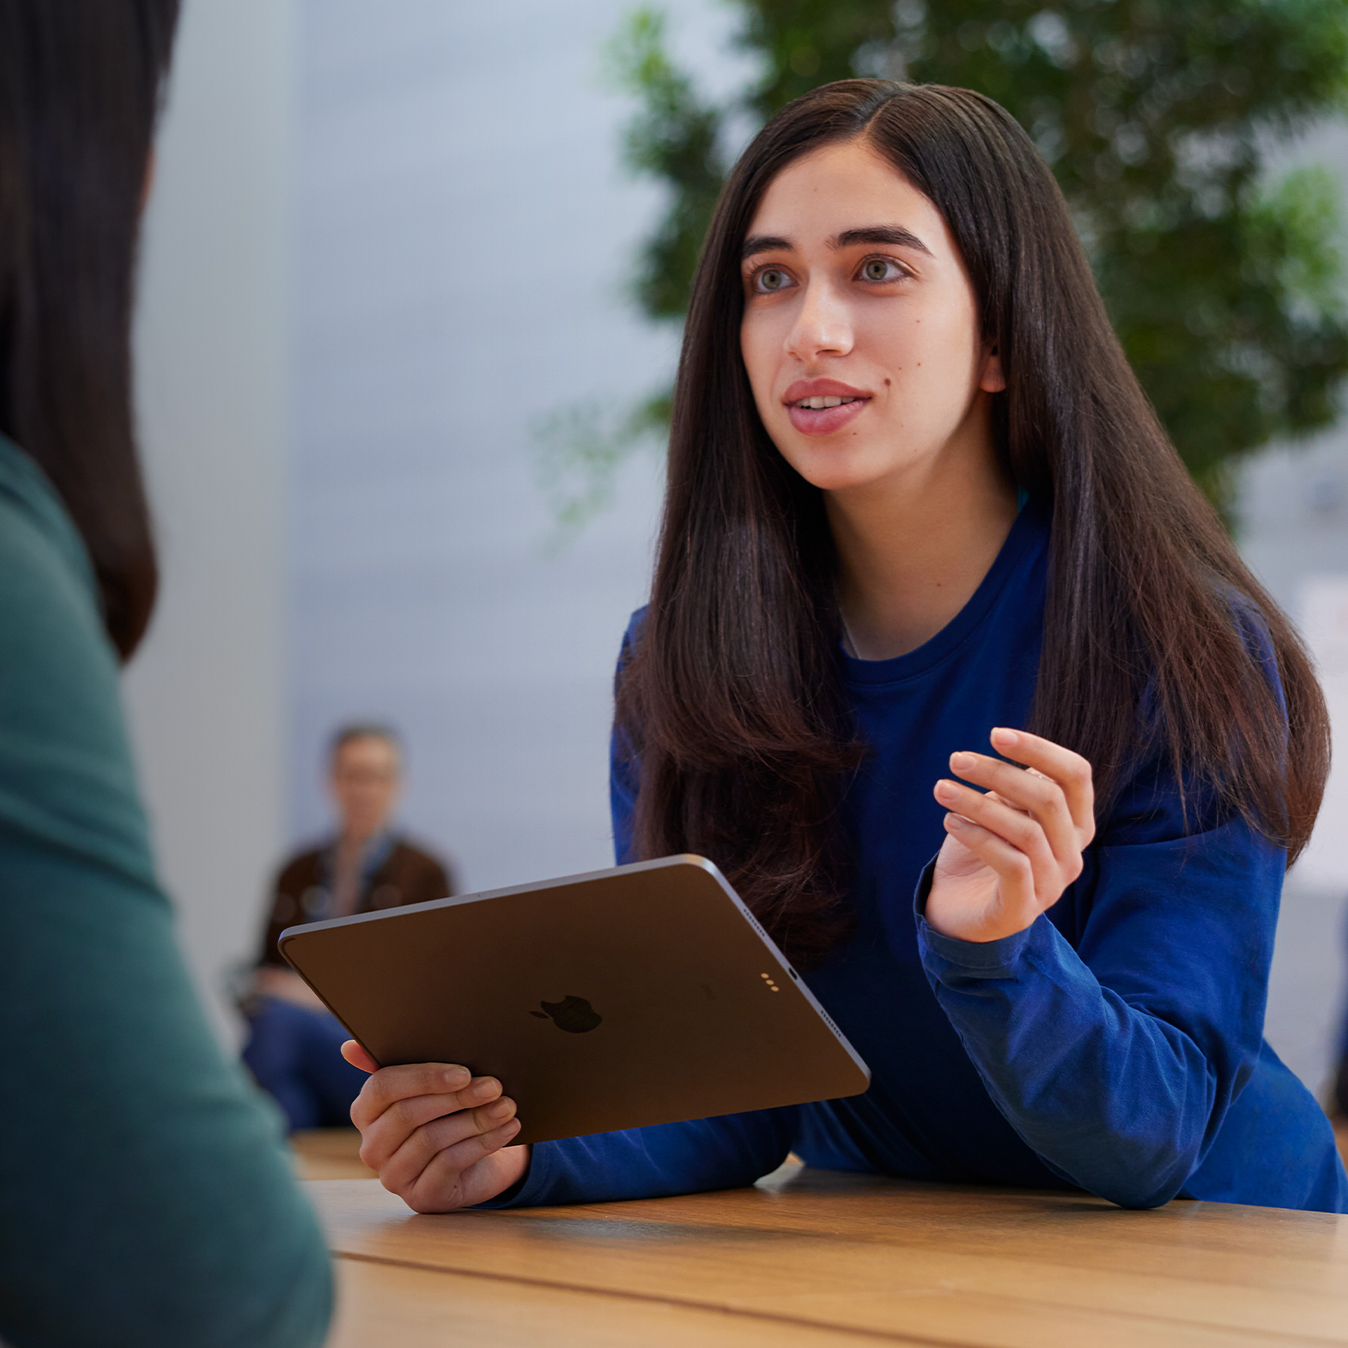 Serene, un iPad à la main, discute avec une cliente.